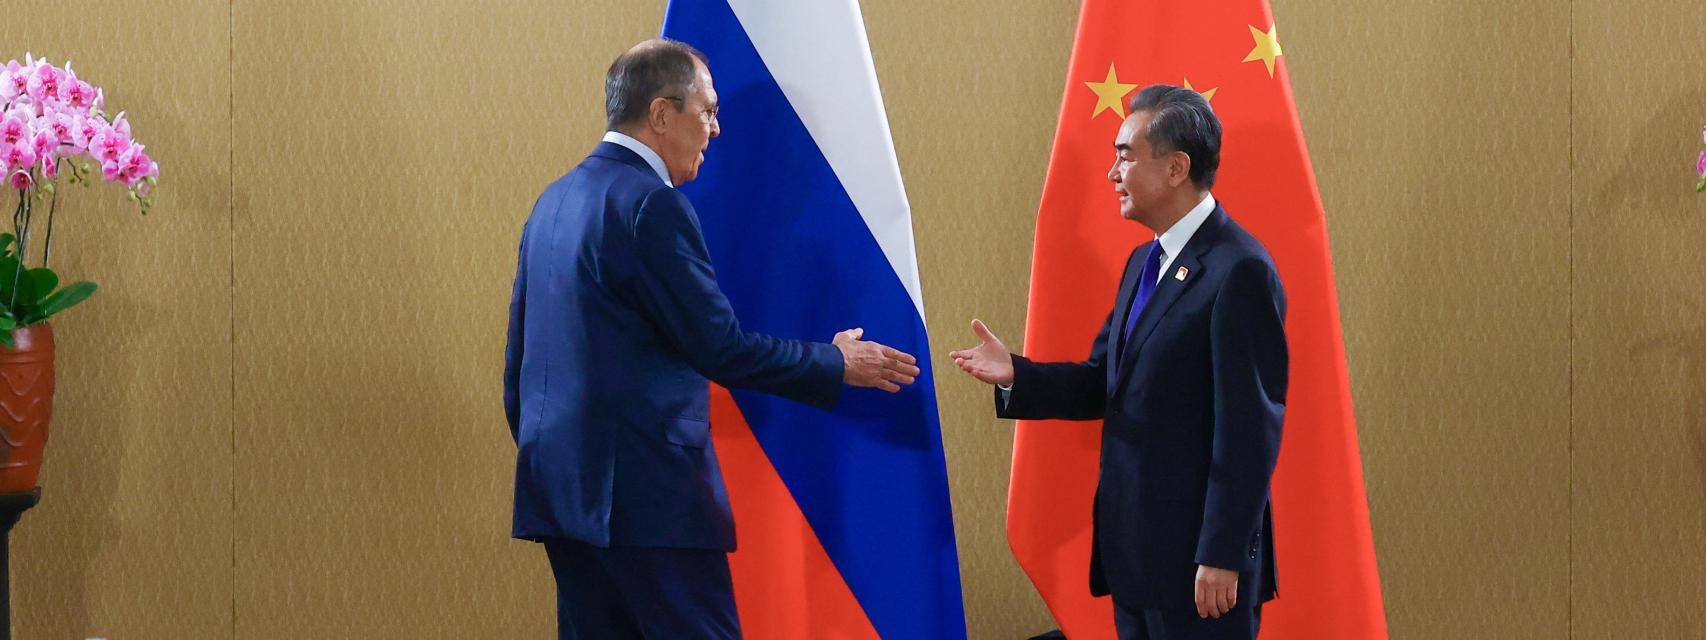 Los ministros de Exteriores de Rusia, Serguéi Lavrov, y China, Wang Yi, reunidos en el marco del G20.